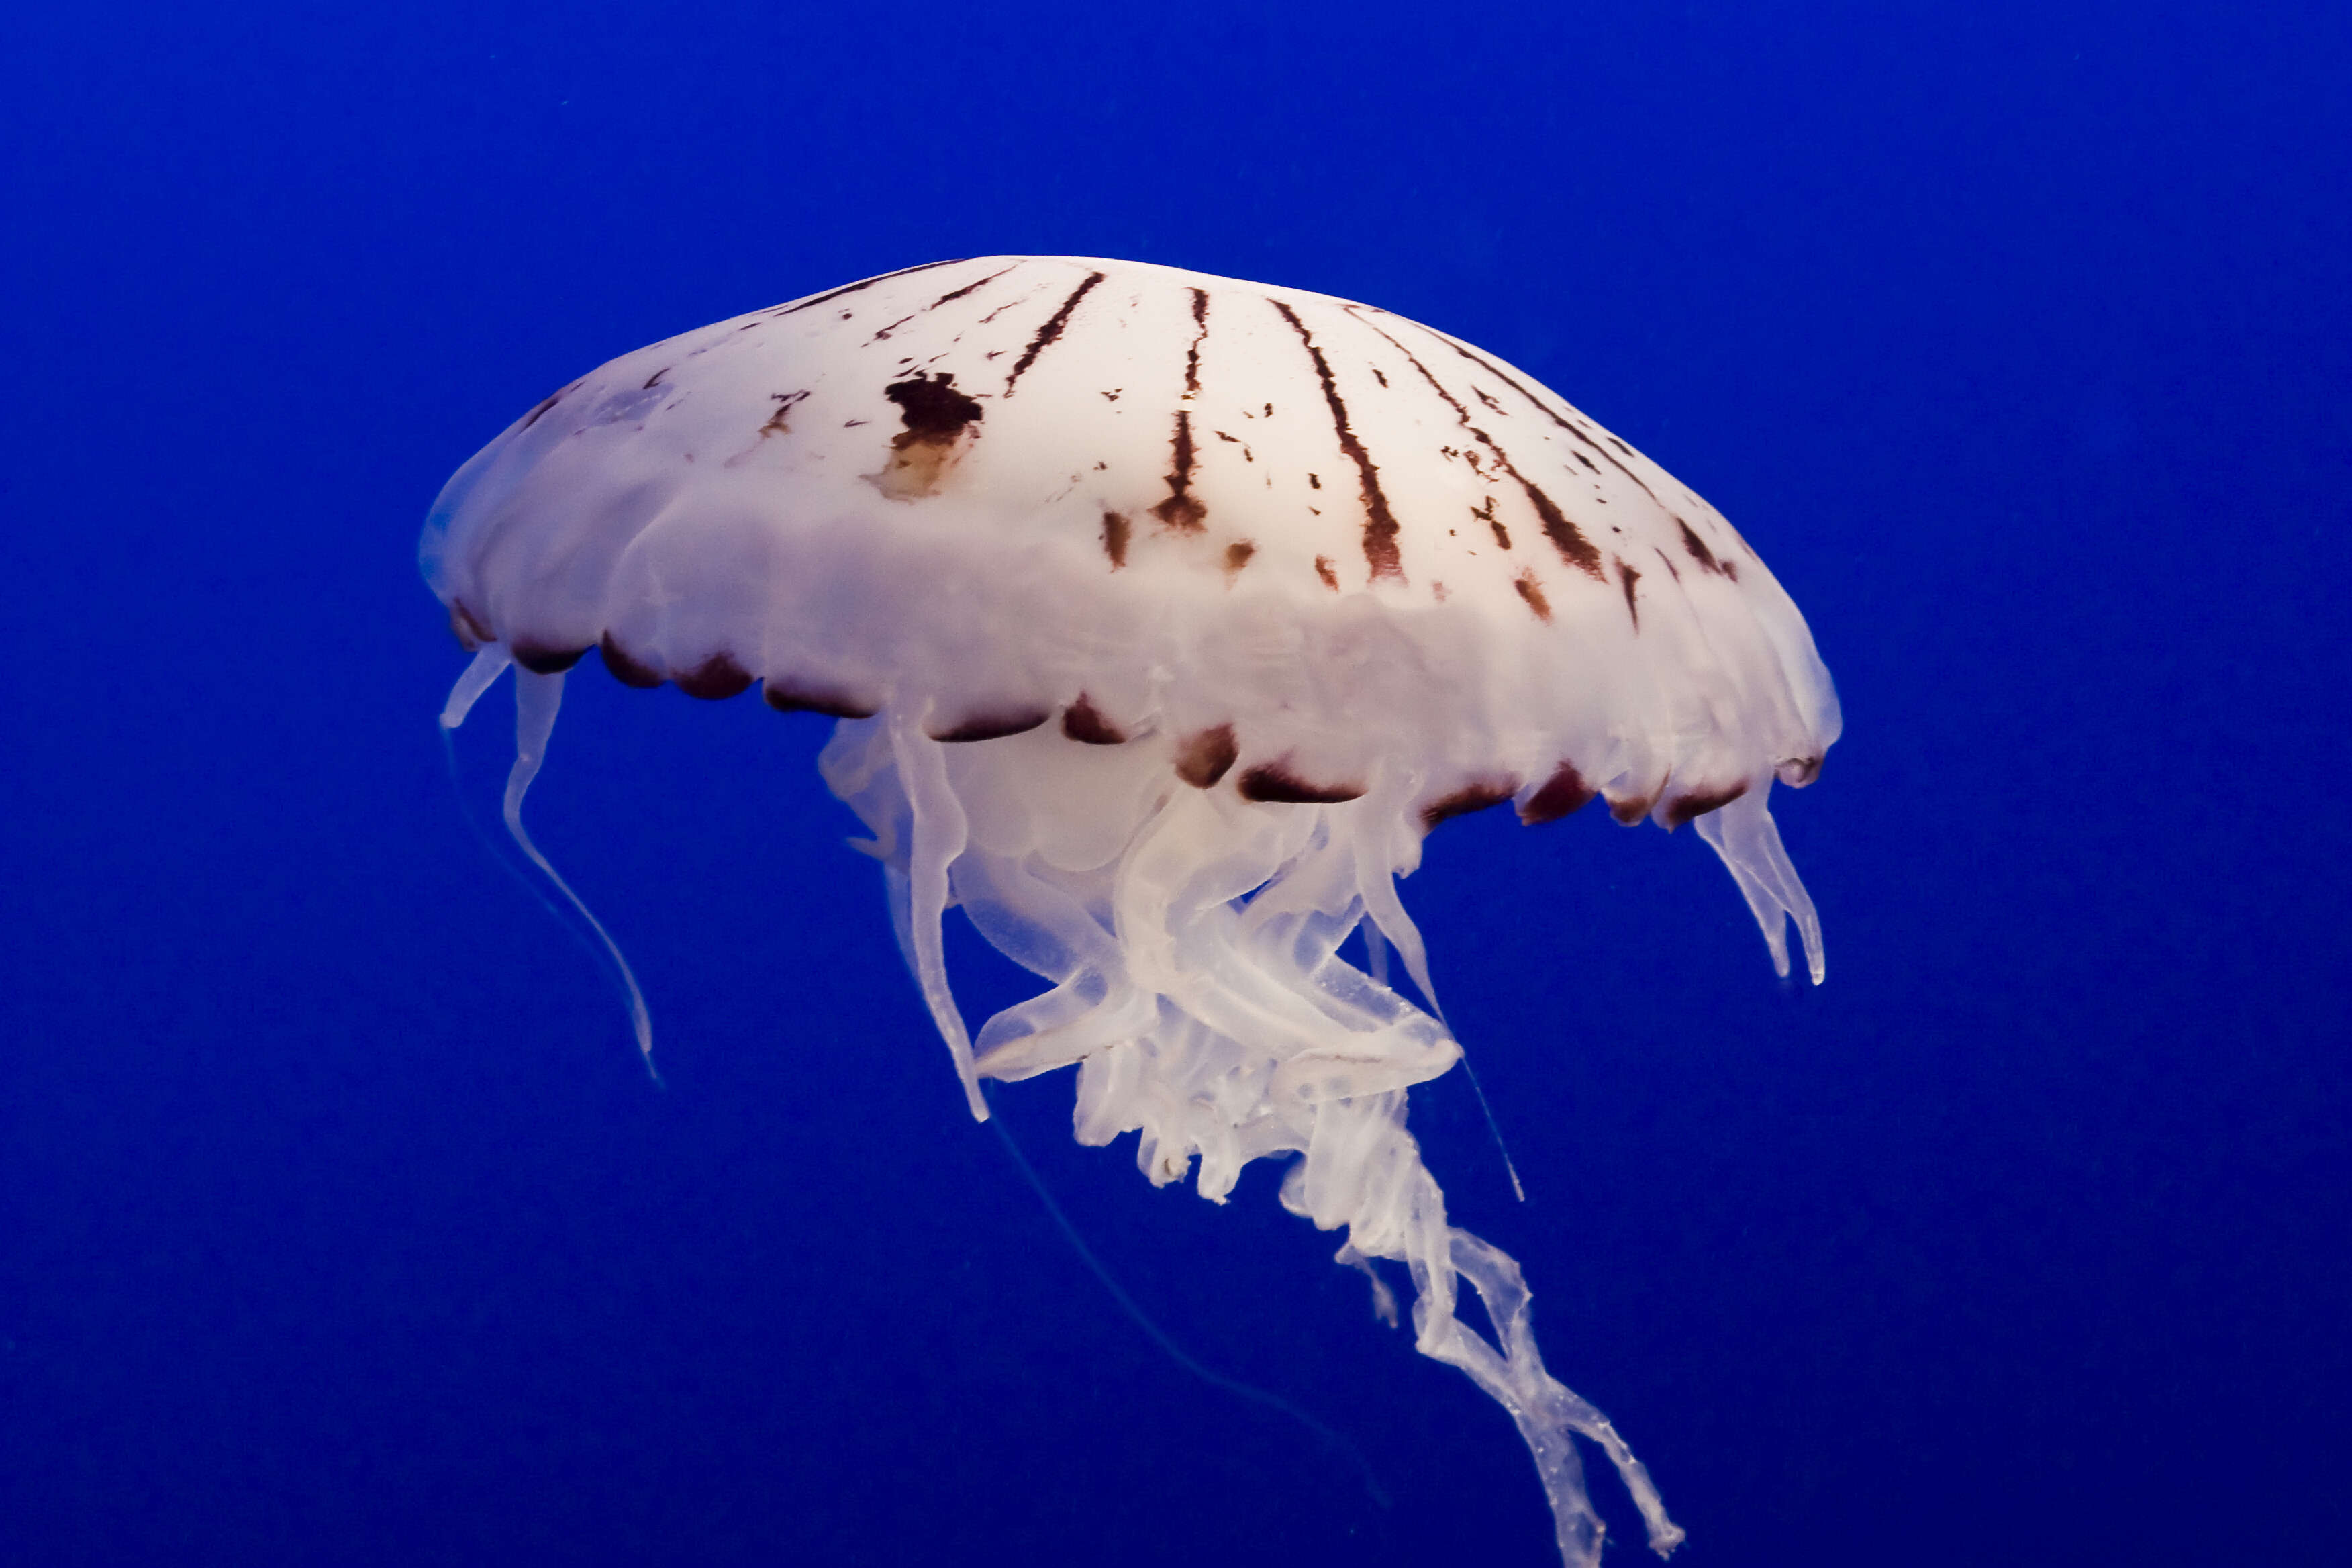 Image of purple-striped jellyfish